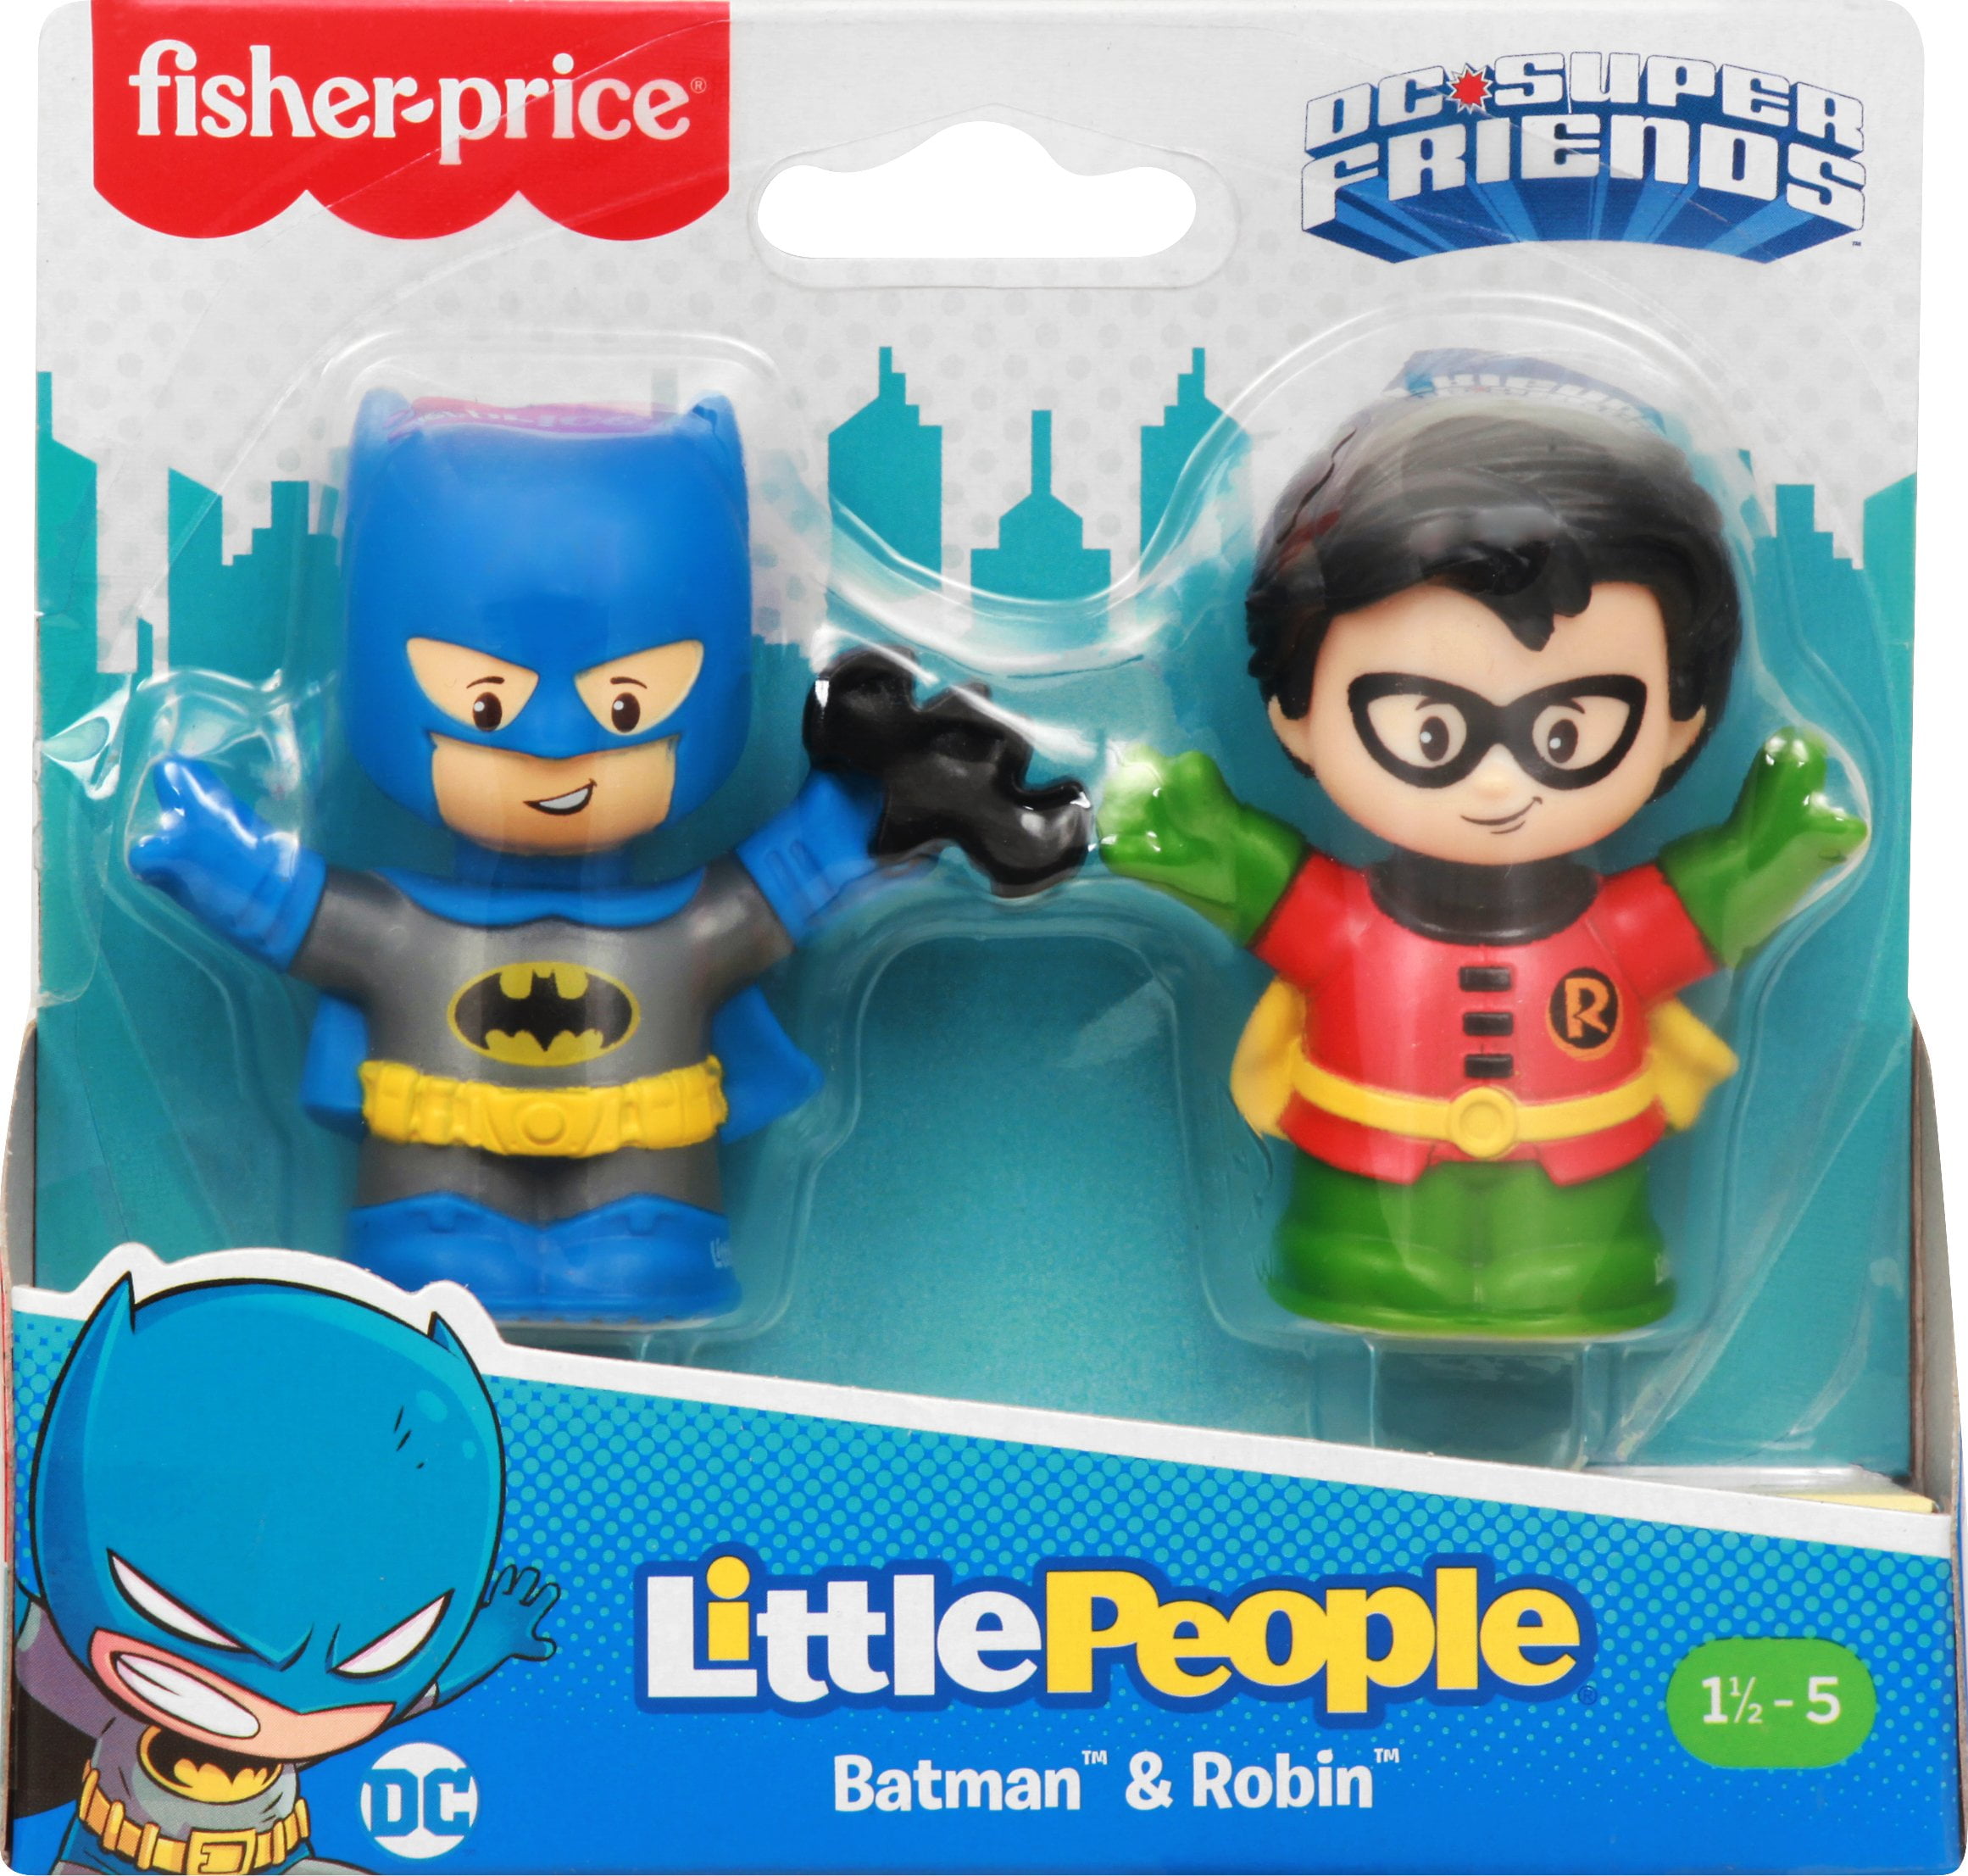 2Pcs Fisher Price Little People Dc Heroes Batman & Robin Figures Boy Kids Toys 